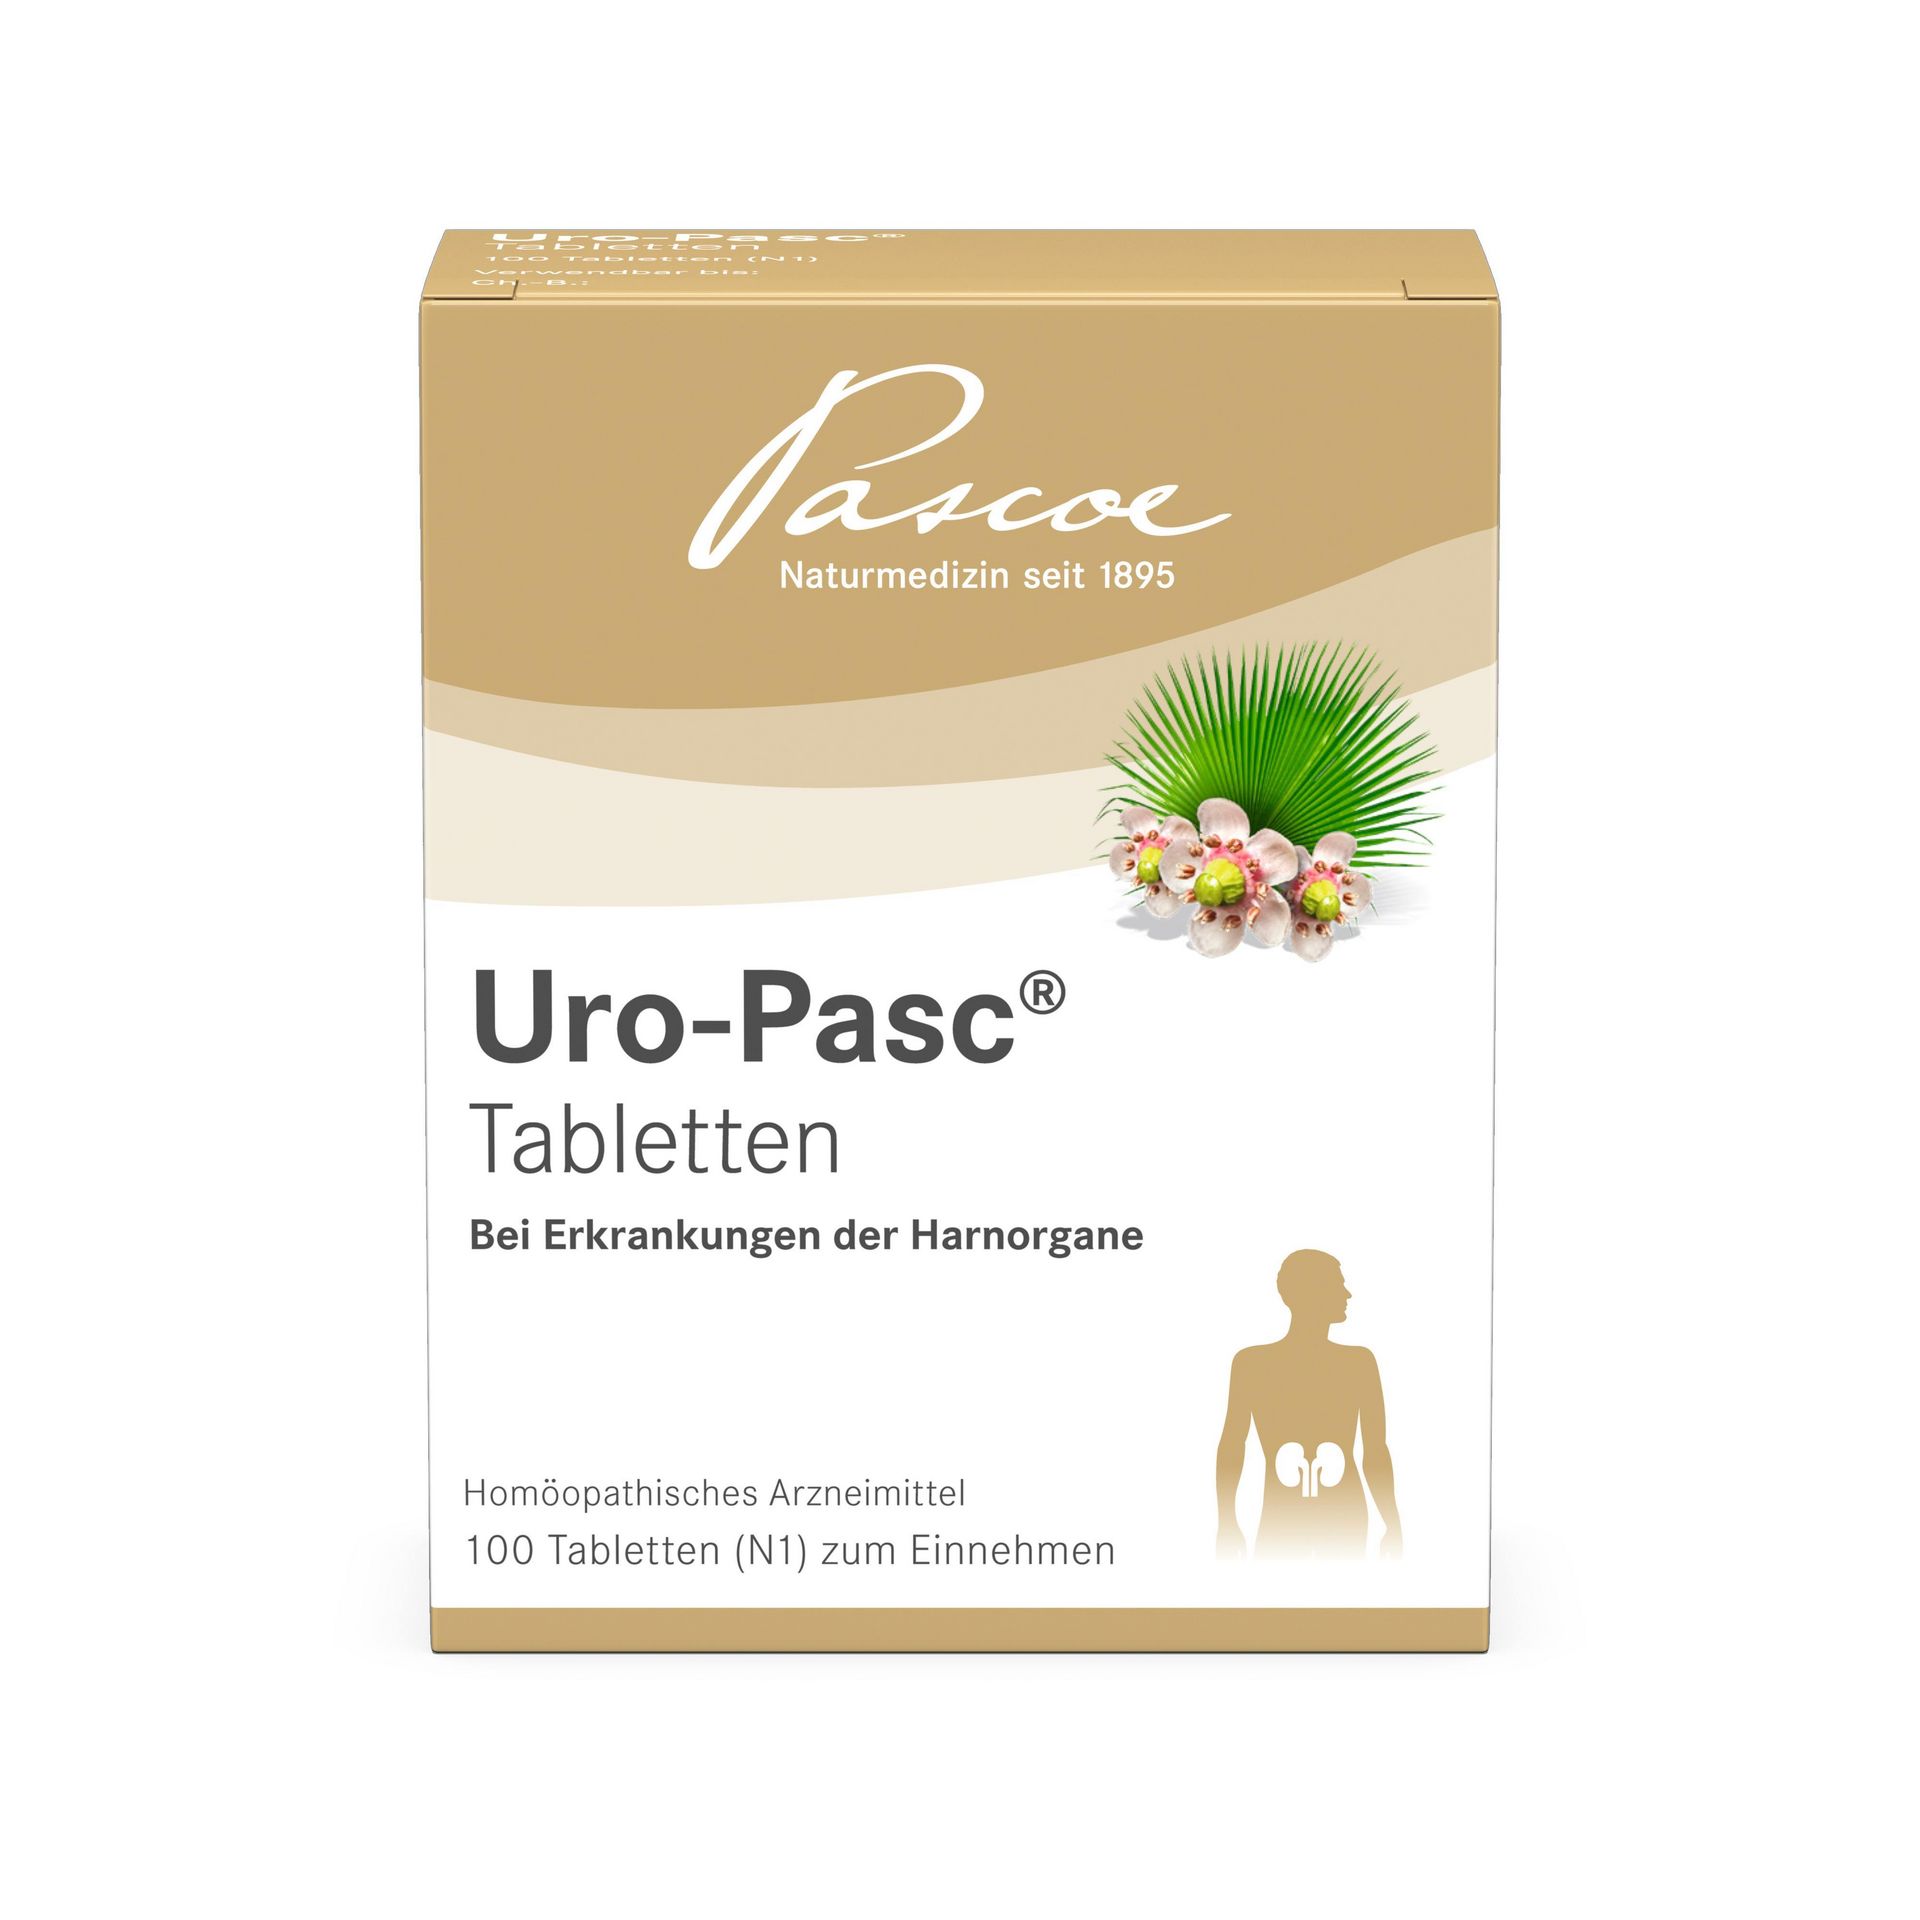 Uro-Pasc TablettenUro-Pasc Tabletten